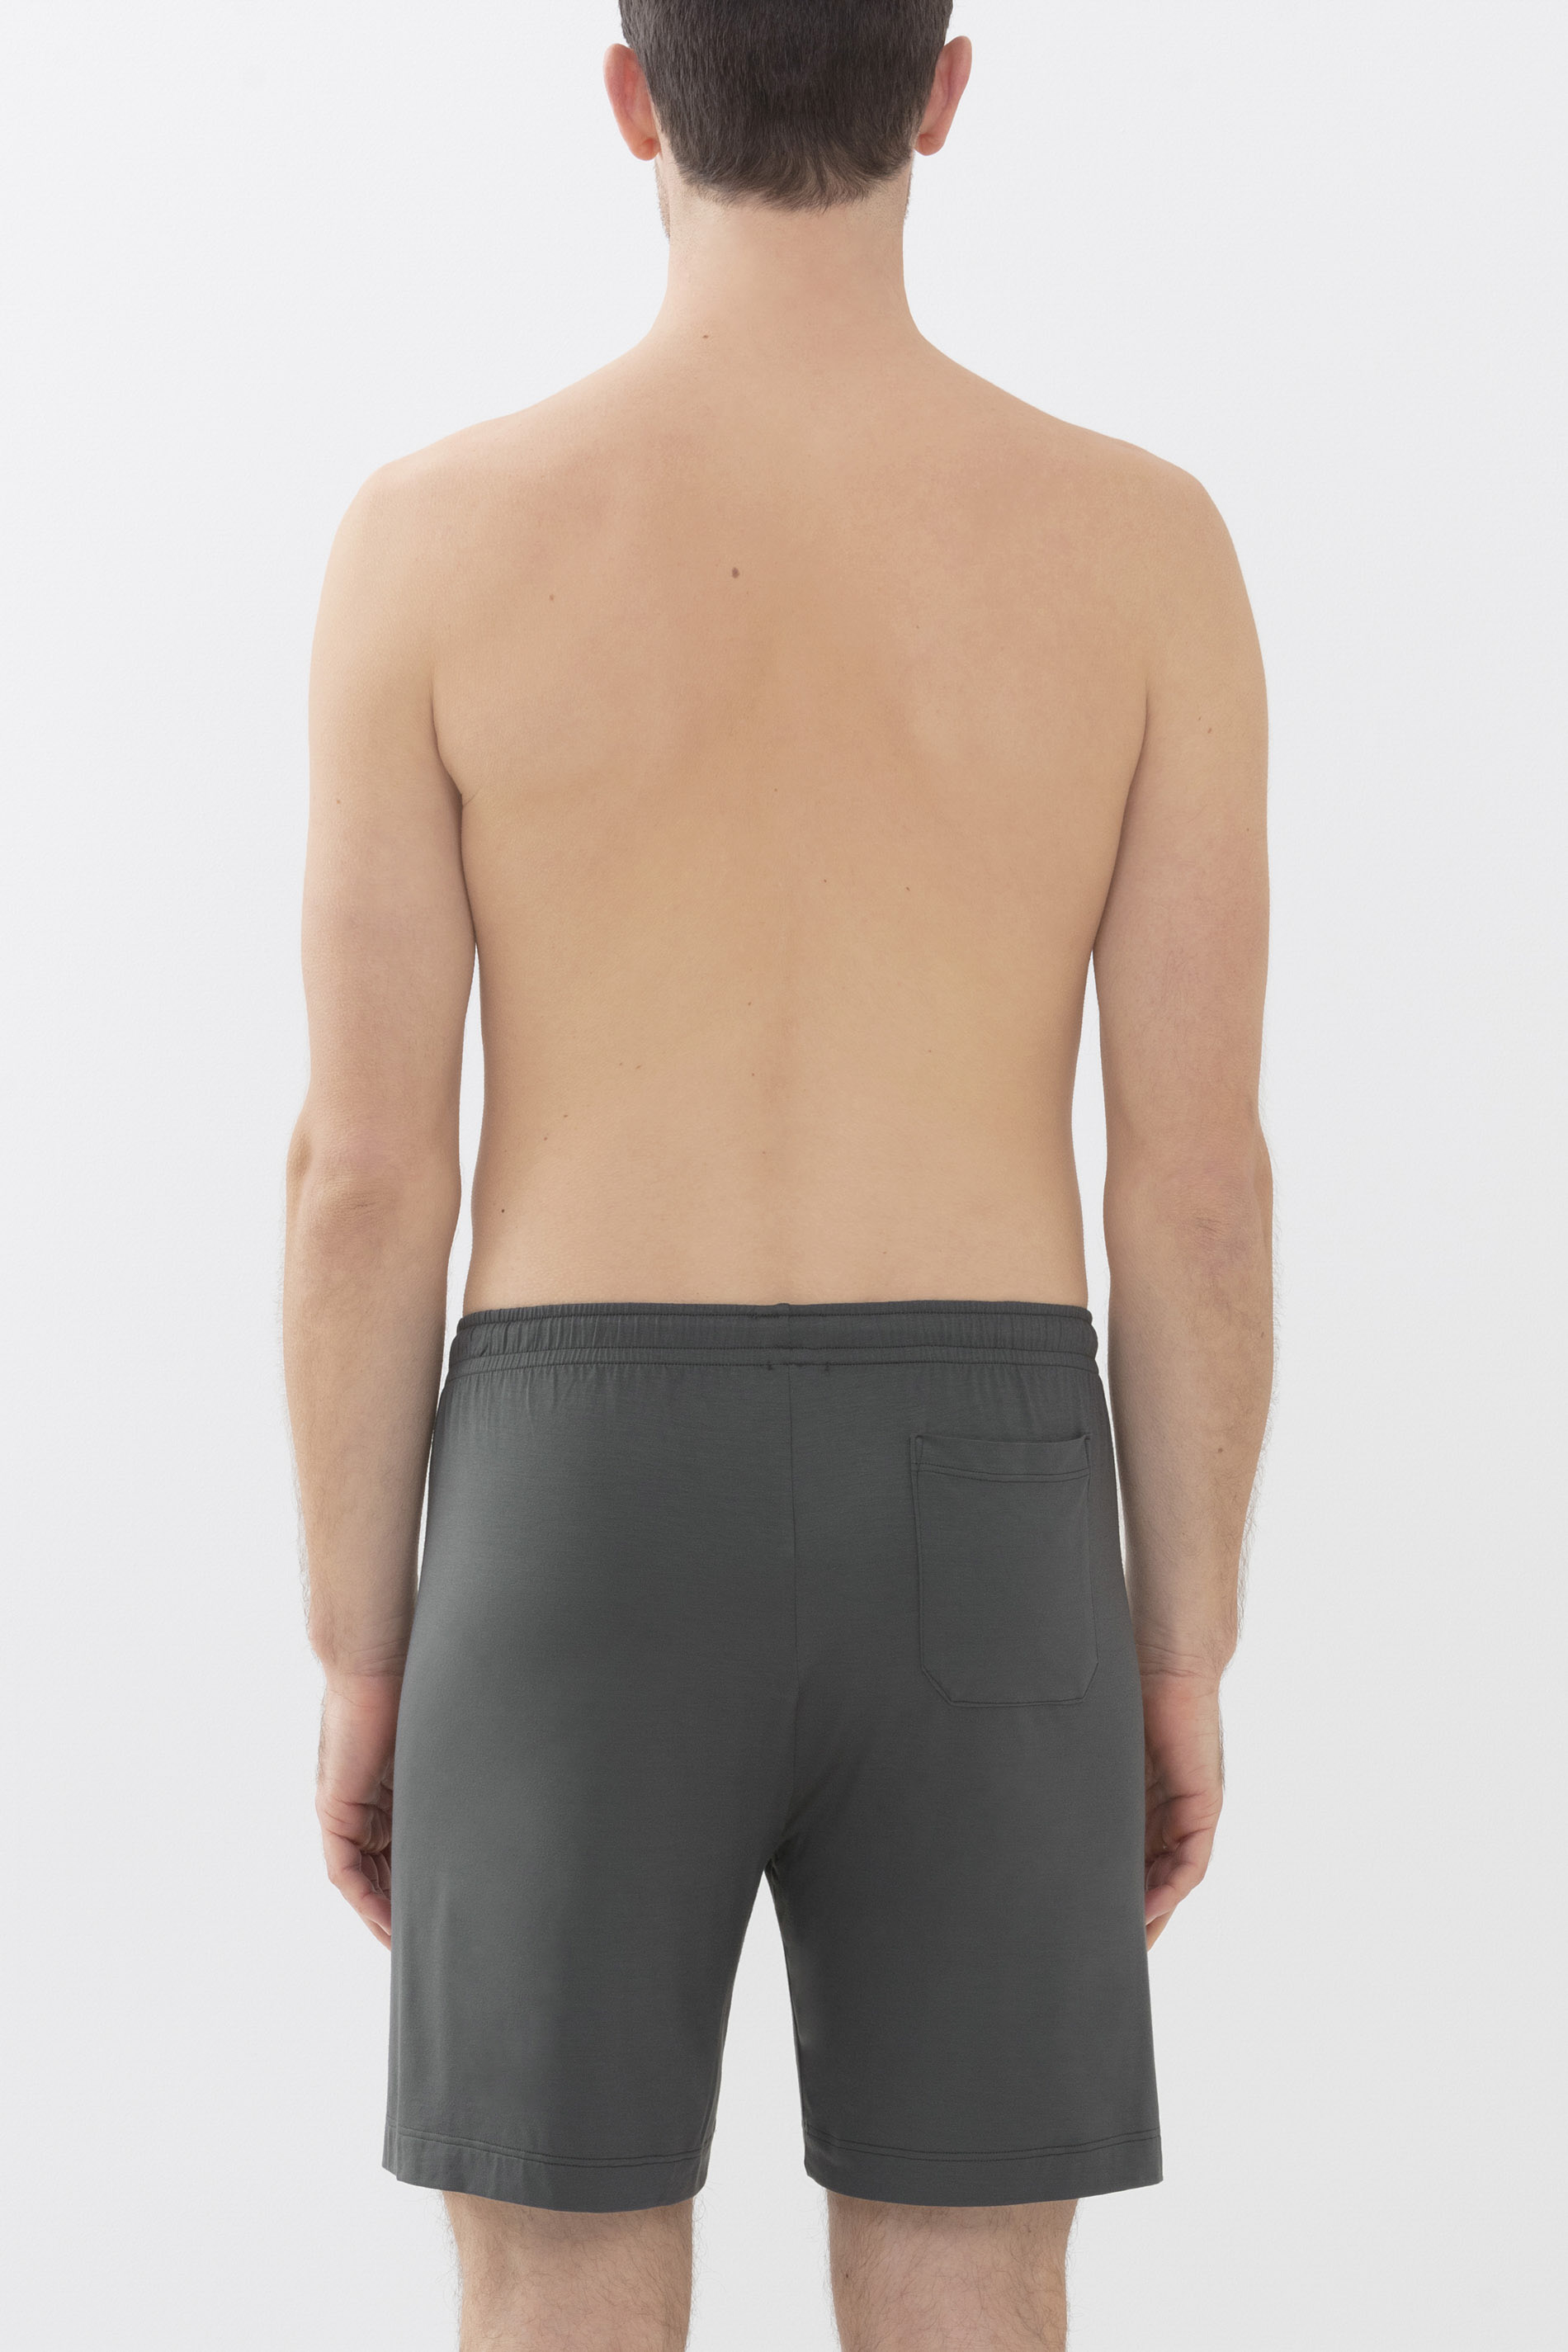 Short pants Stormy Grey Serie Jefferson Modal Rear View | mey®